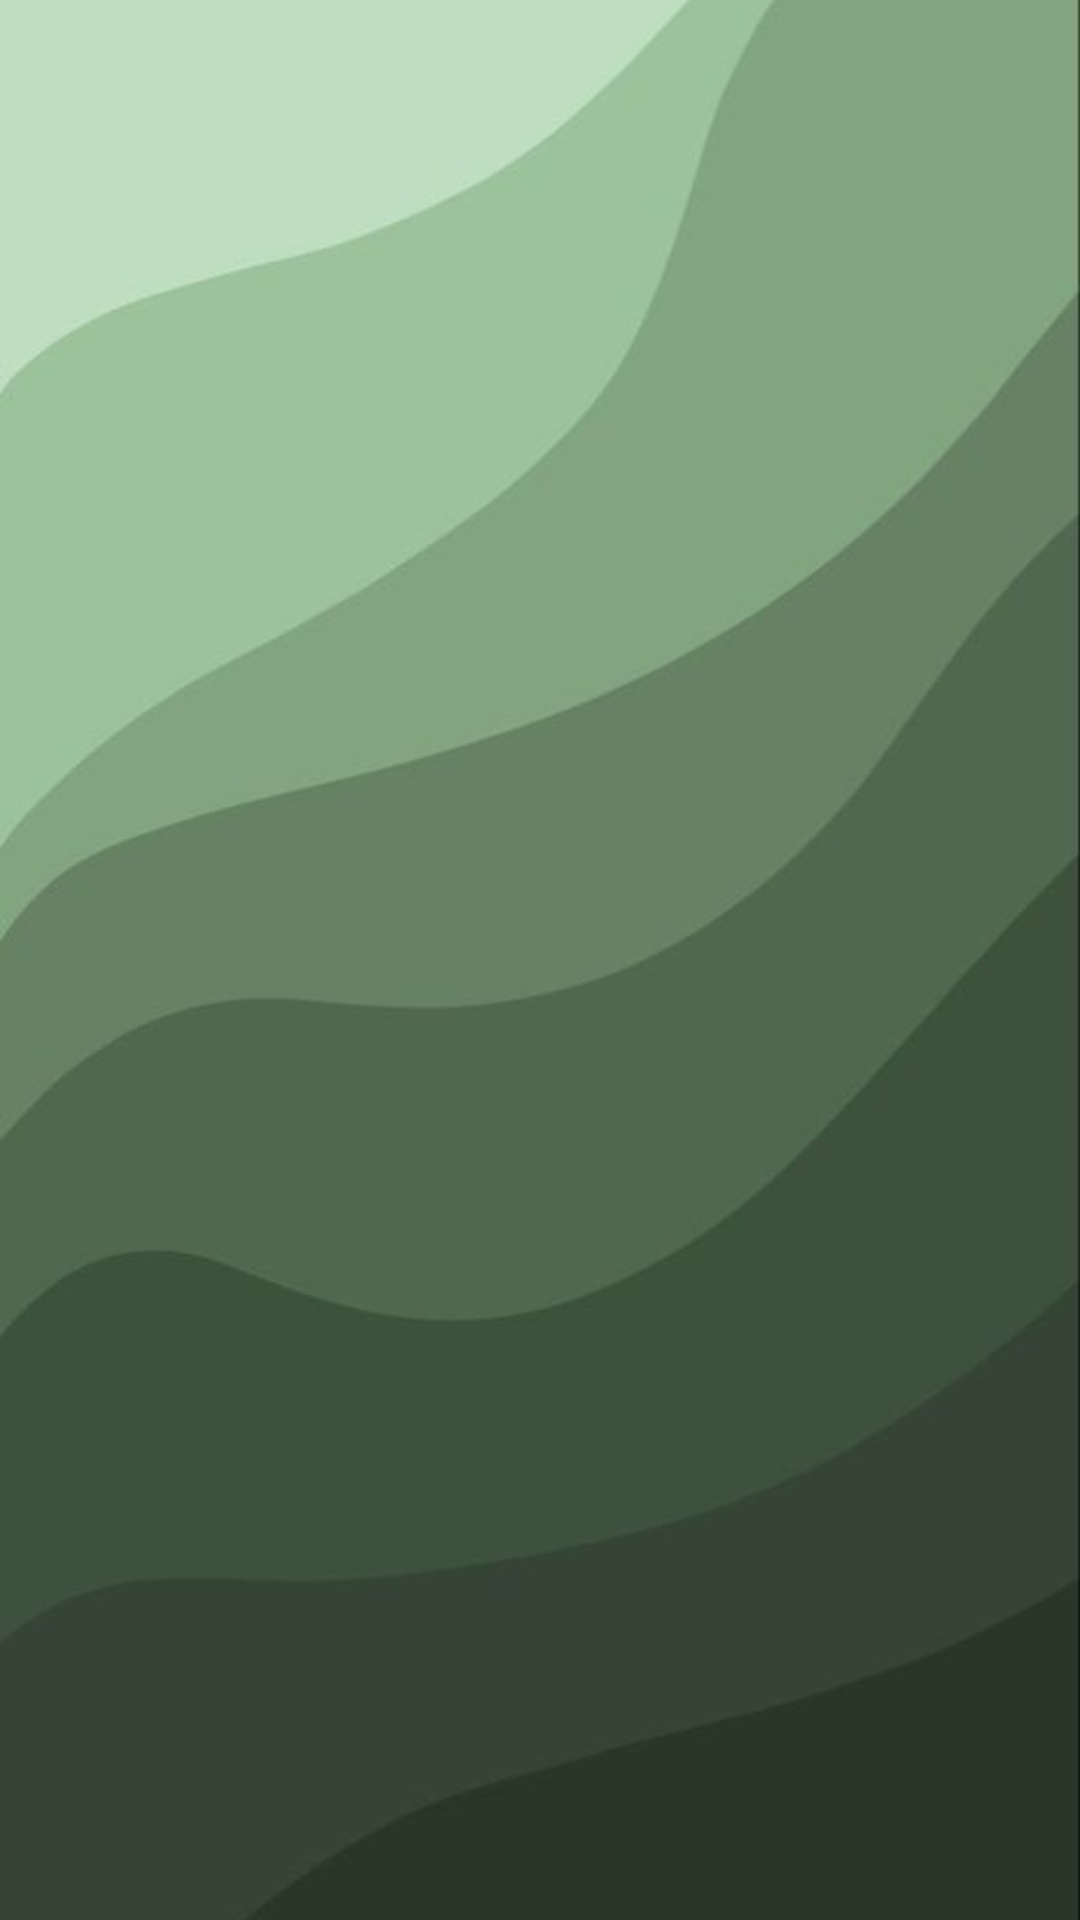 Green Minimalist Wallpapers - Top 35 Best Green Minimalist Wallpapers  Download